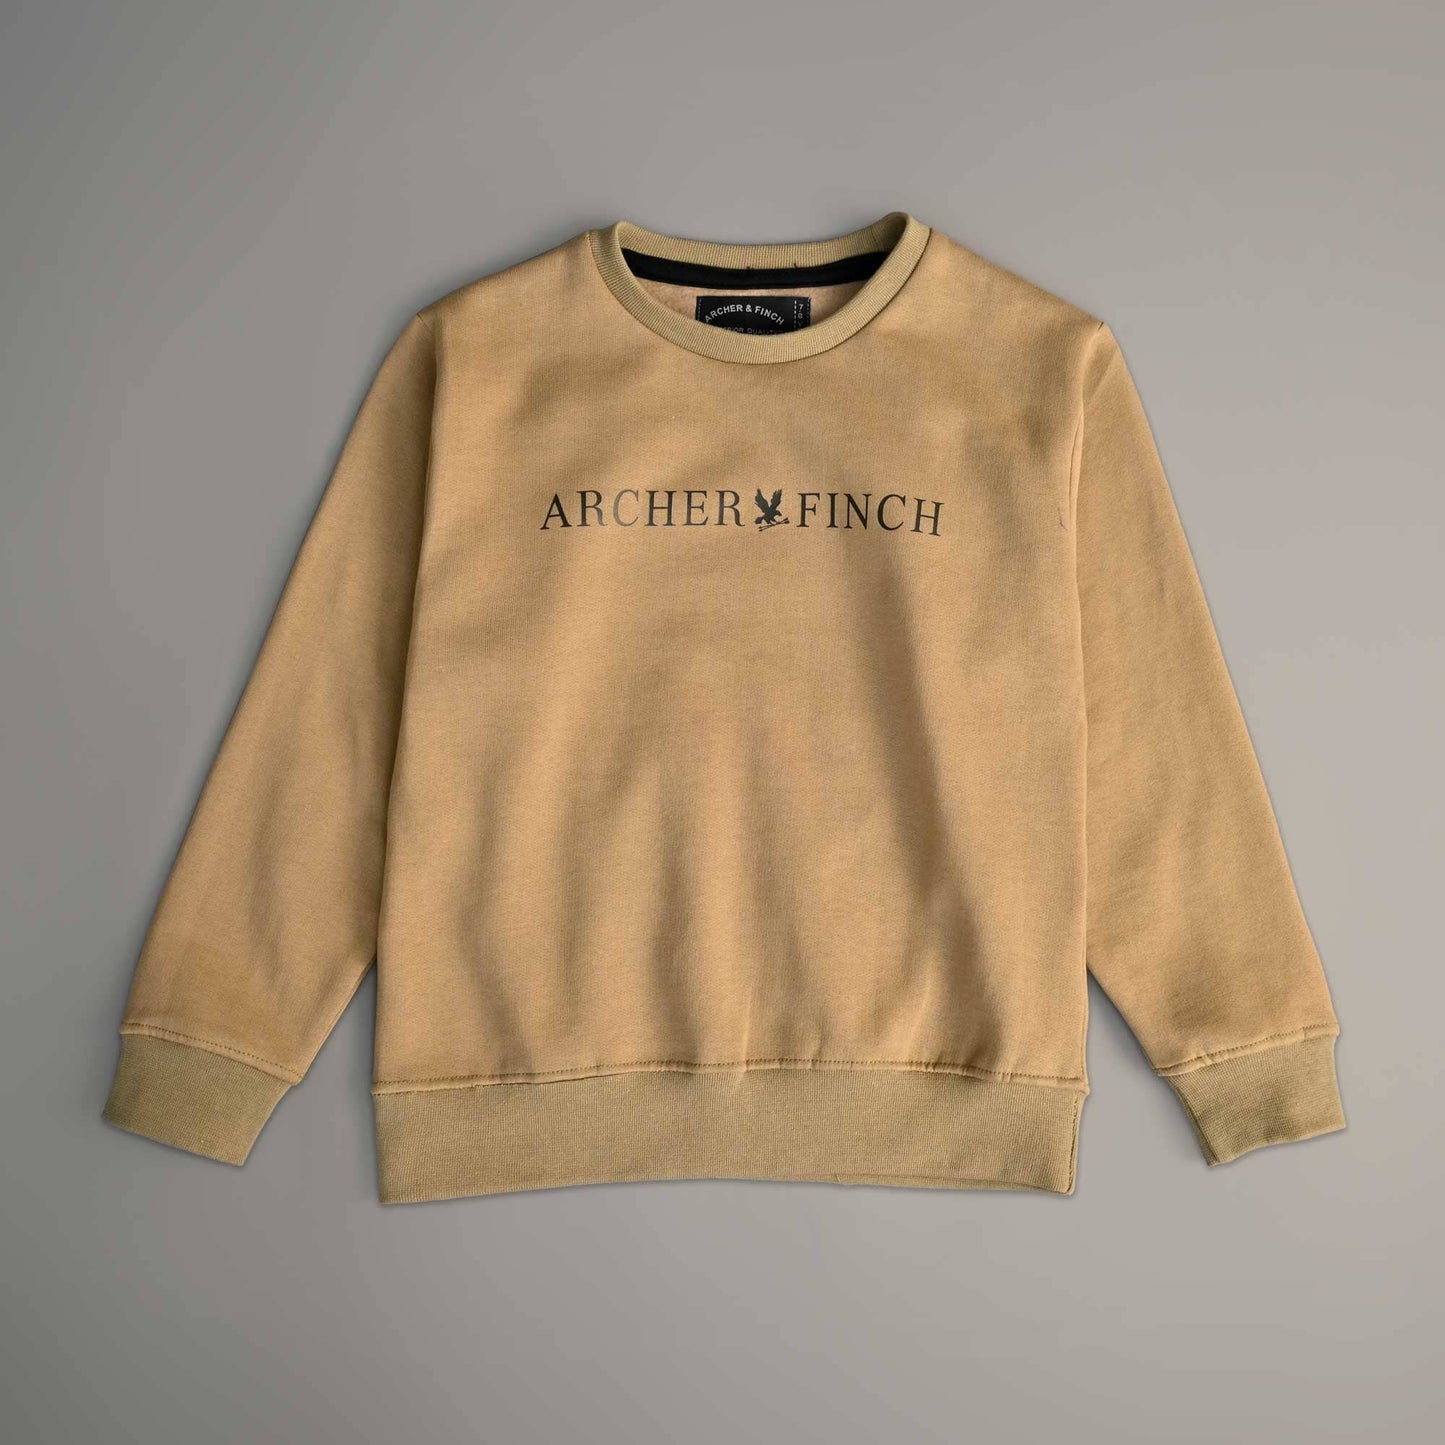 A&F Boy's Archer & Finch Printed Fleece Sweat Shirt Boy's Sweat Shirt LFS Olive 3-4 Years 